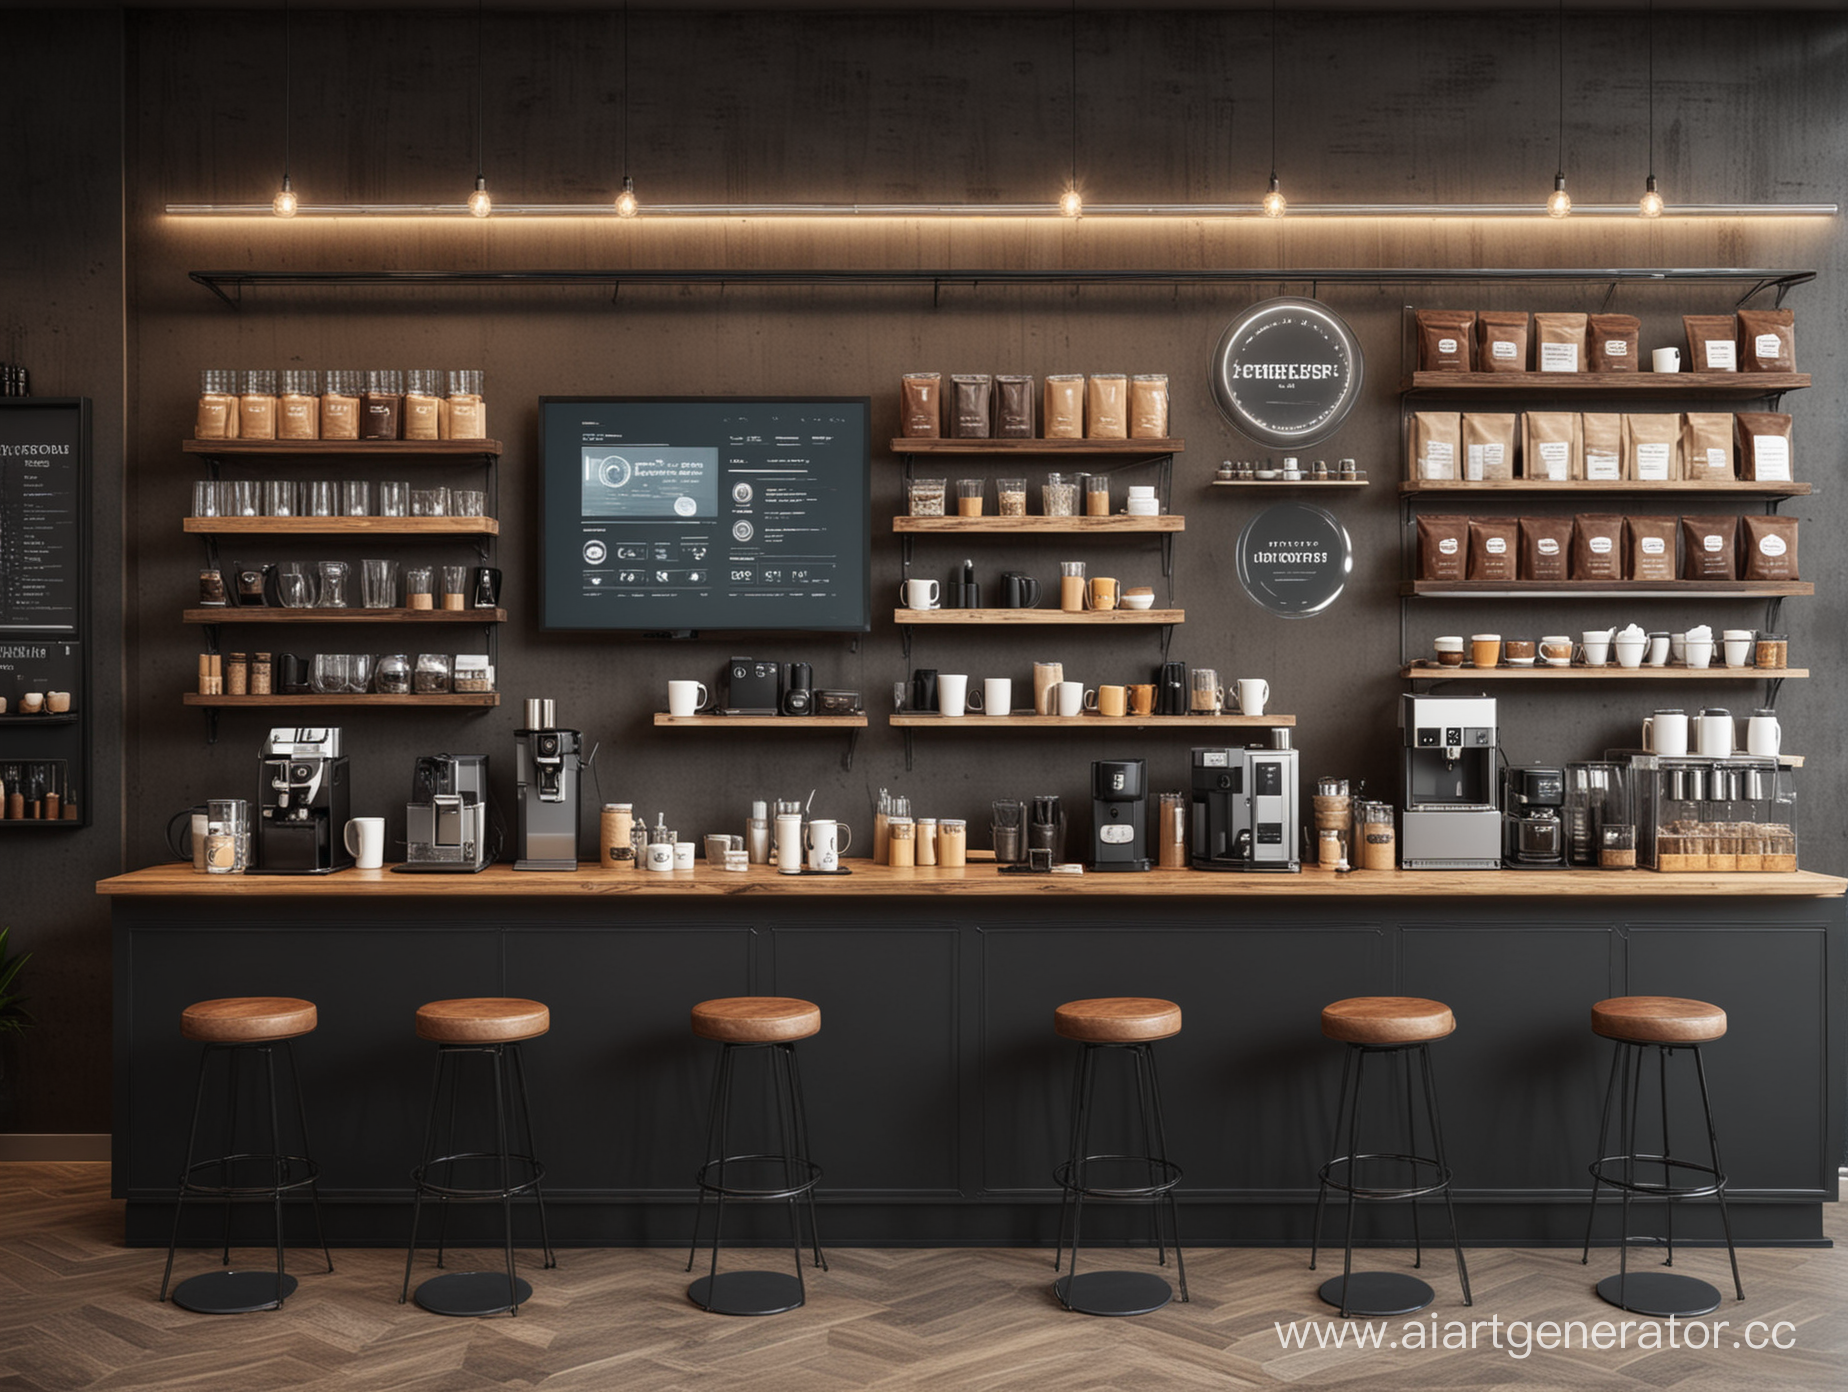 coffee shop showcase in high-tech style